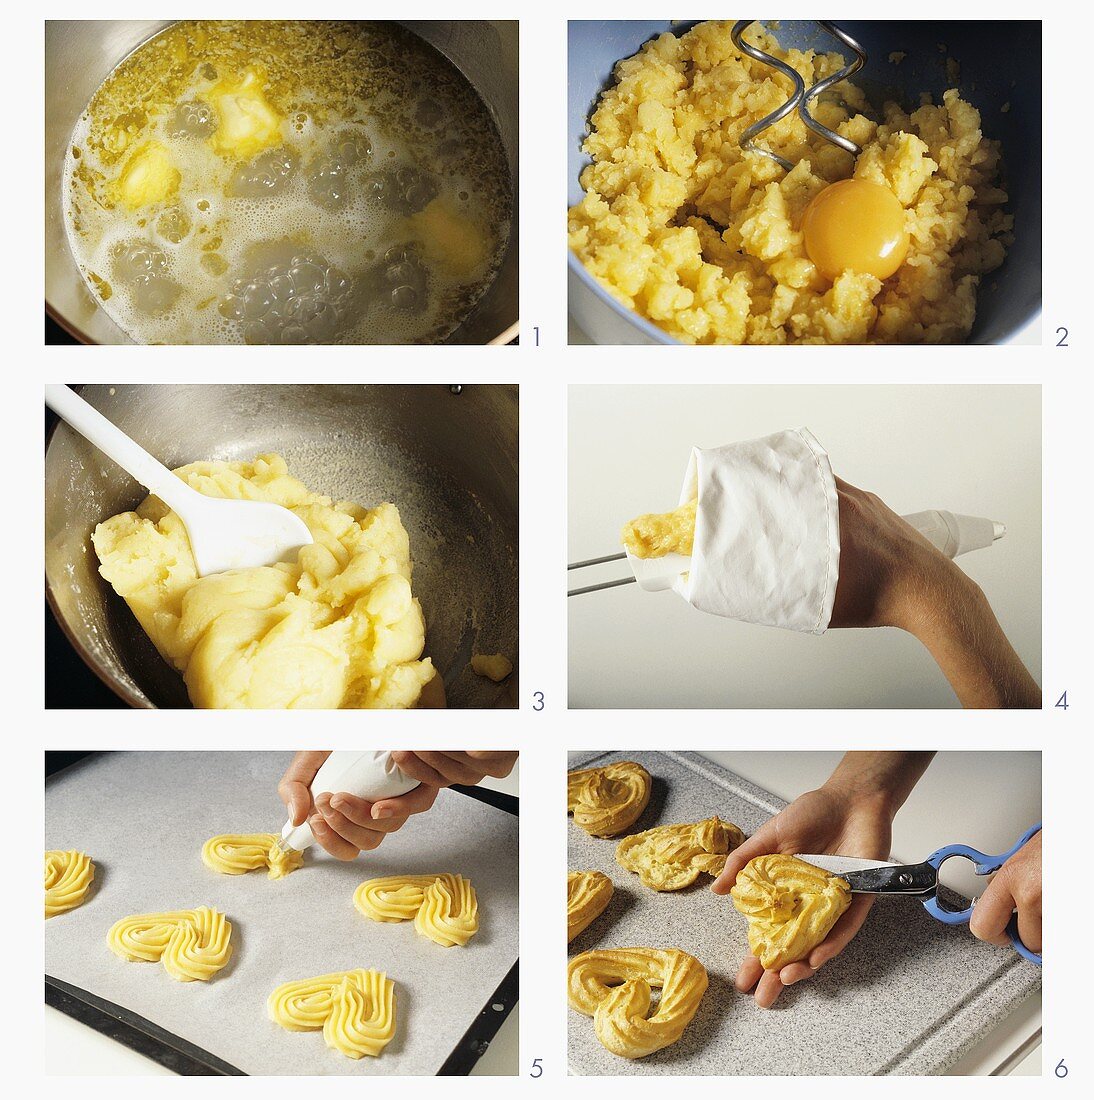 Making choux pastry mandarin hearts